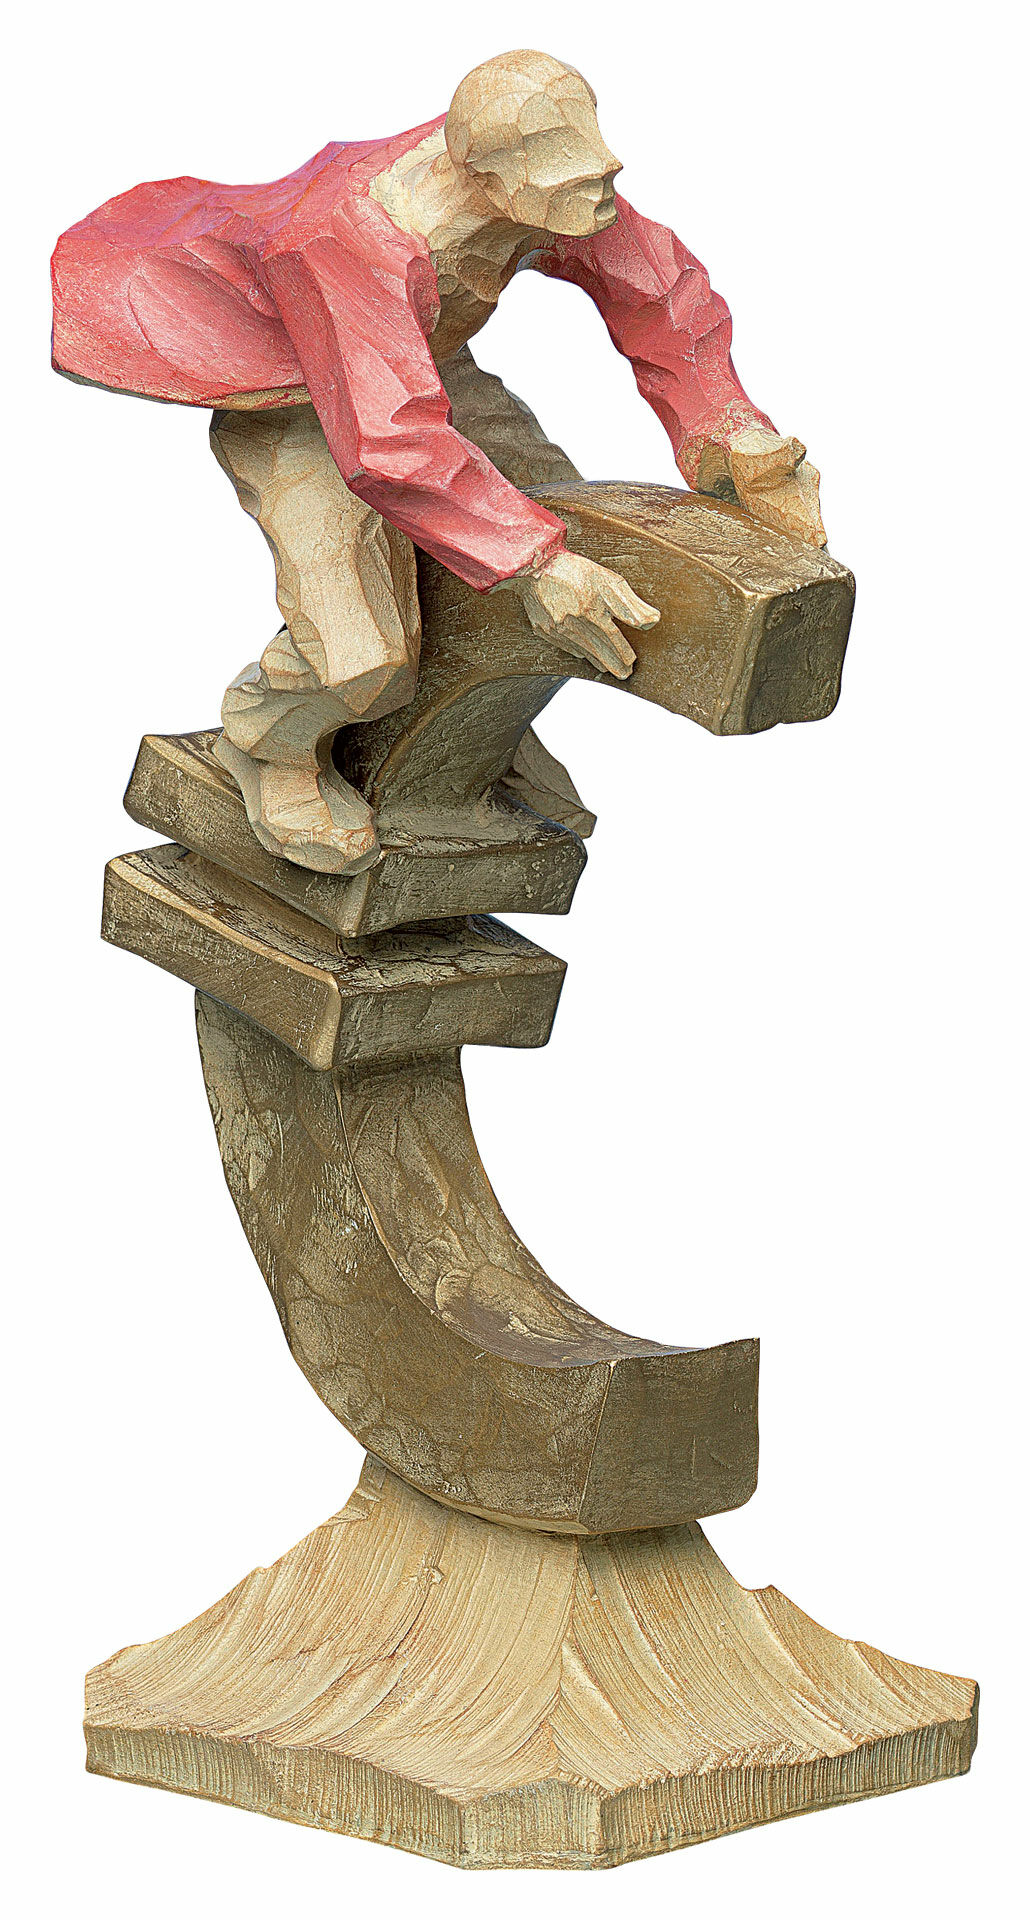 Sculpture "Banker", cast wood finish by Roman Johann Strobl